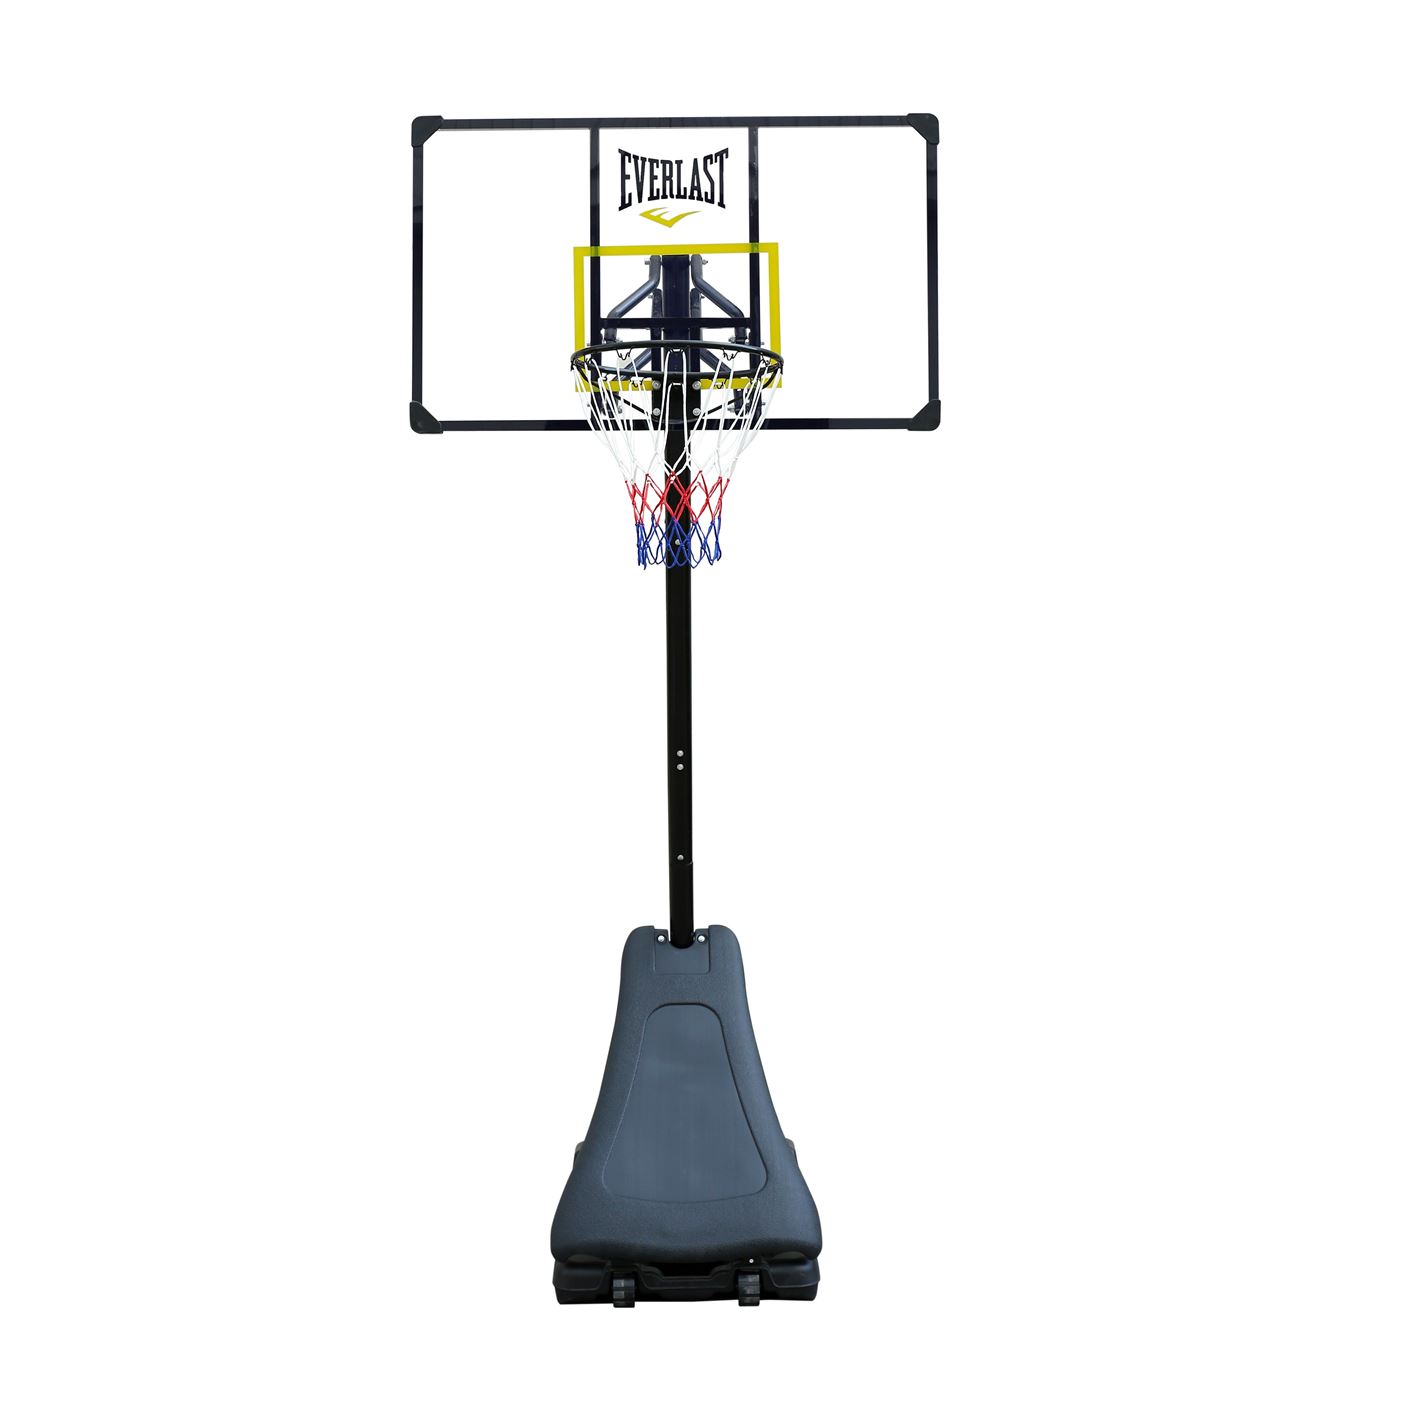 Everlast Premium Basketball Stand